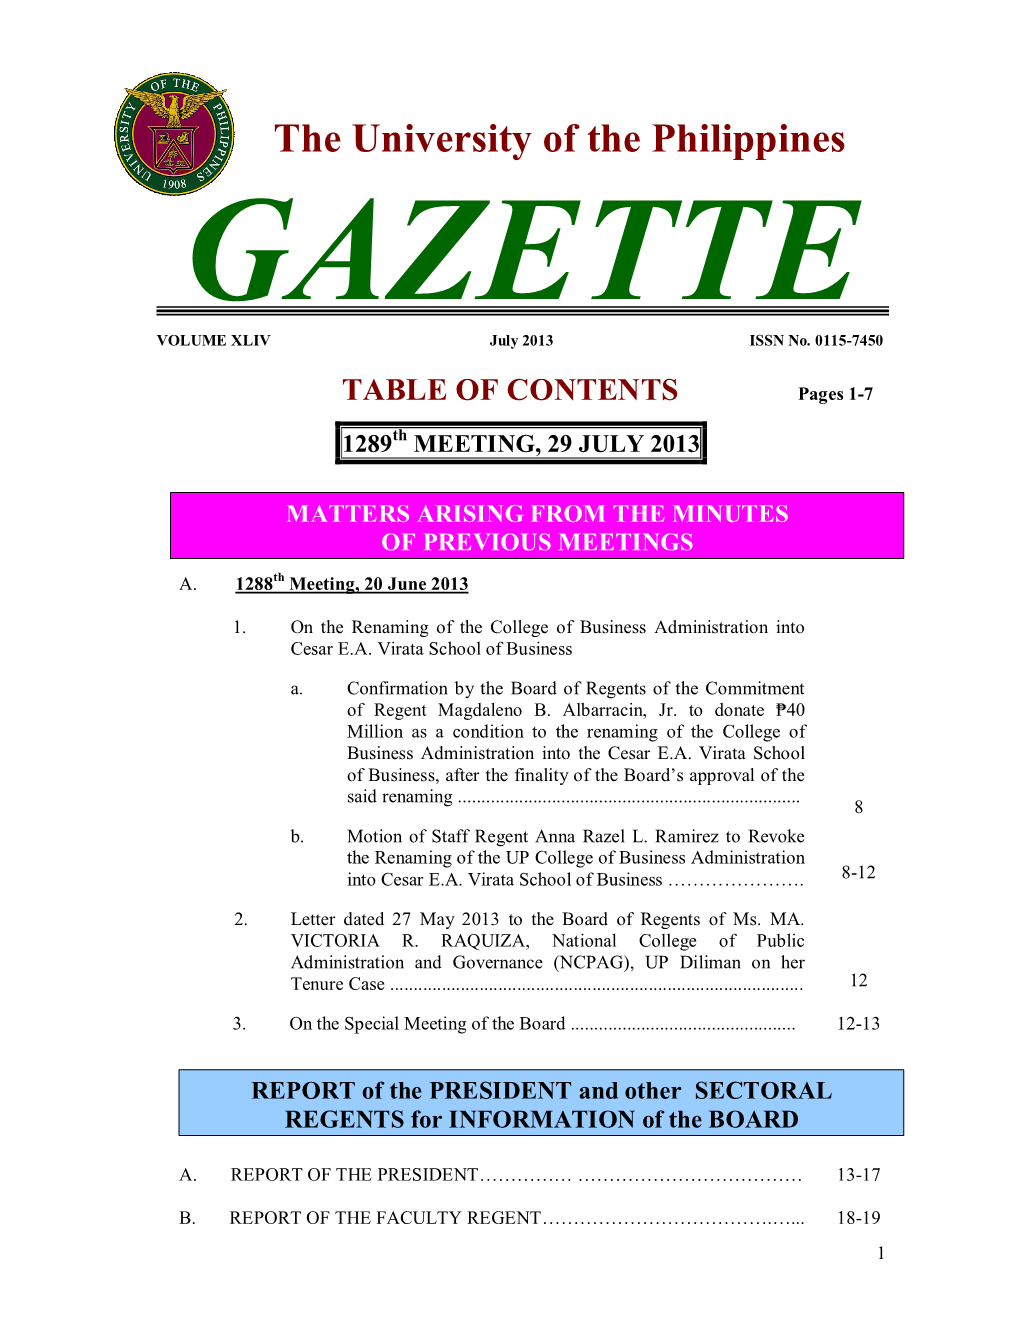 The University of the Philippines GAZETTE VOLUME XLIV July 2013 ISSN No